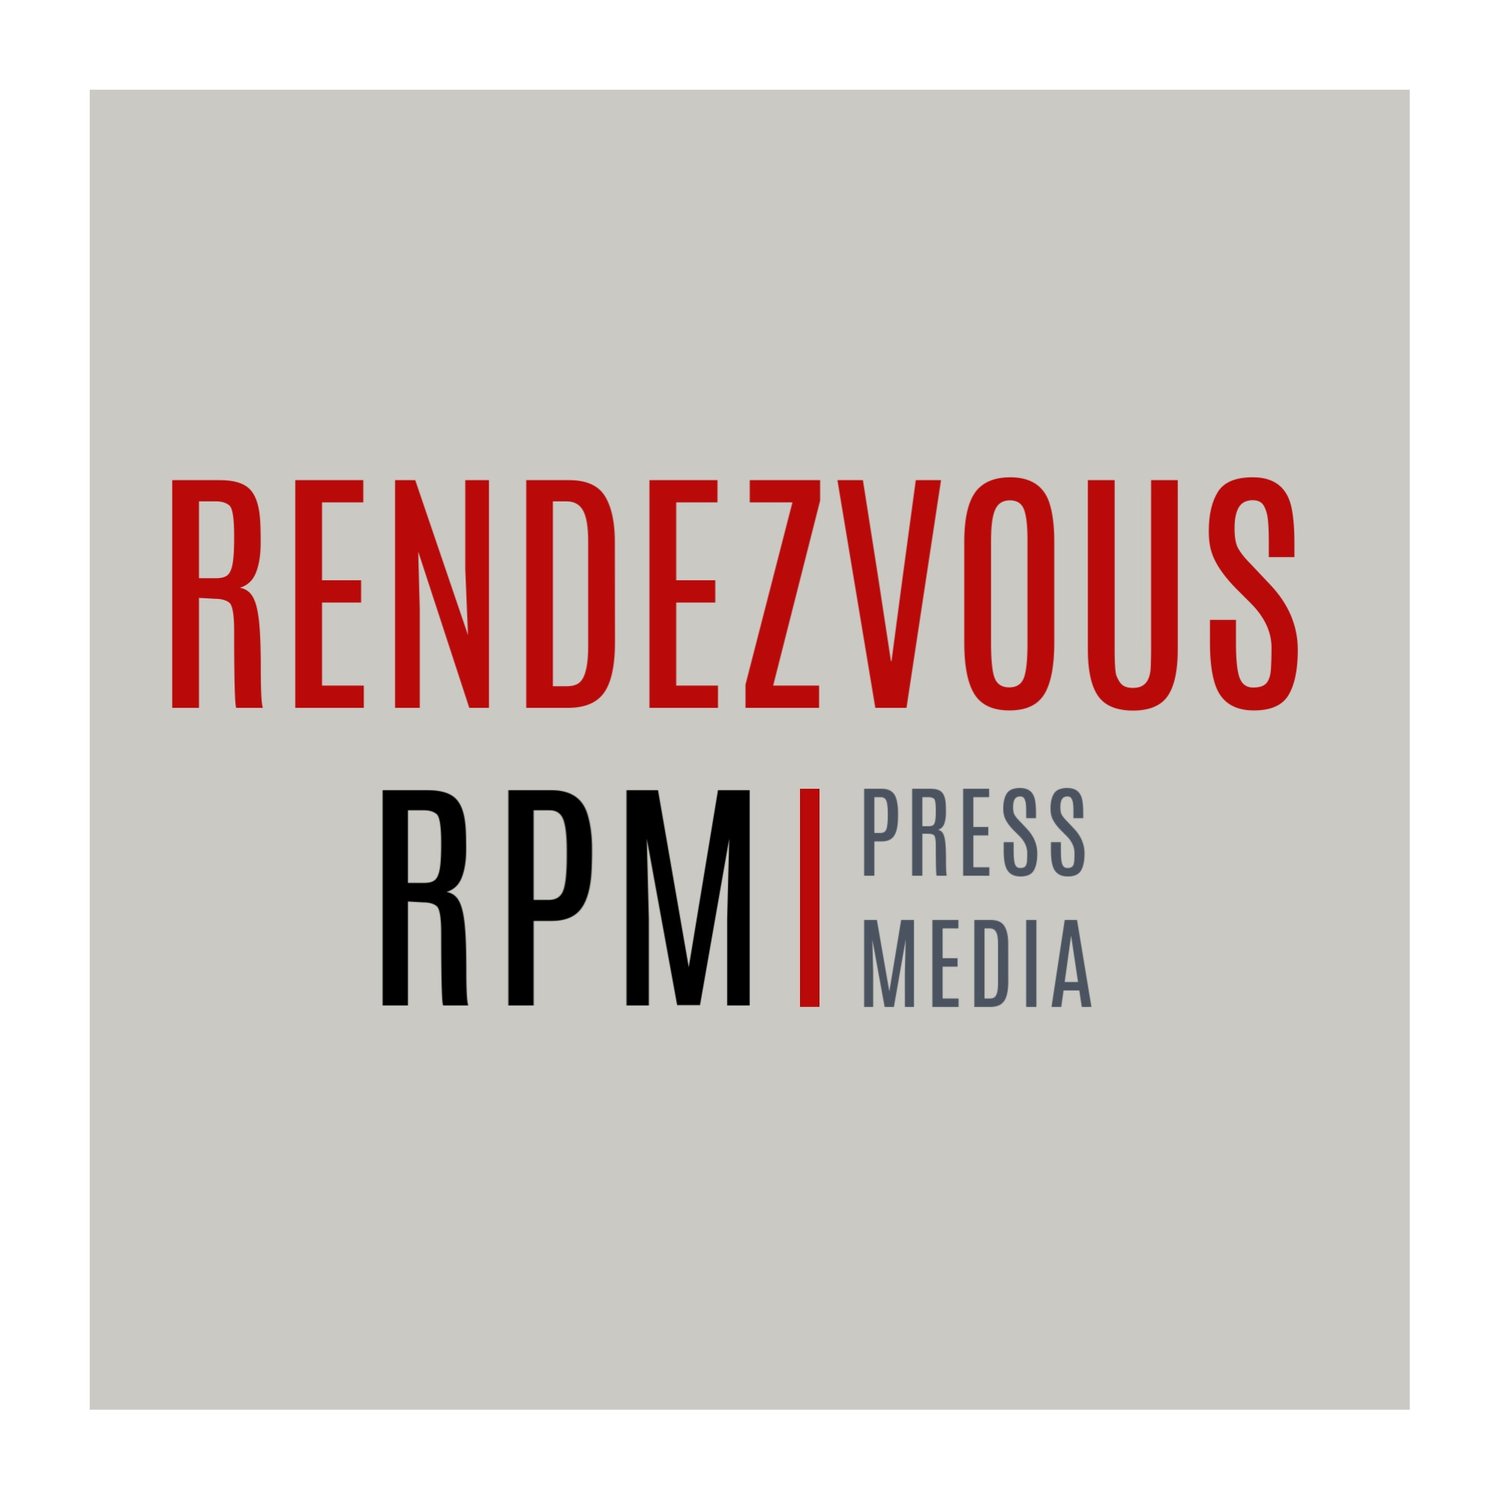 Rendezvous Press Media